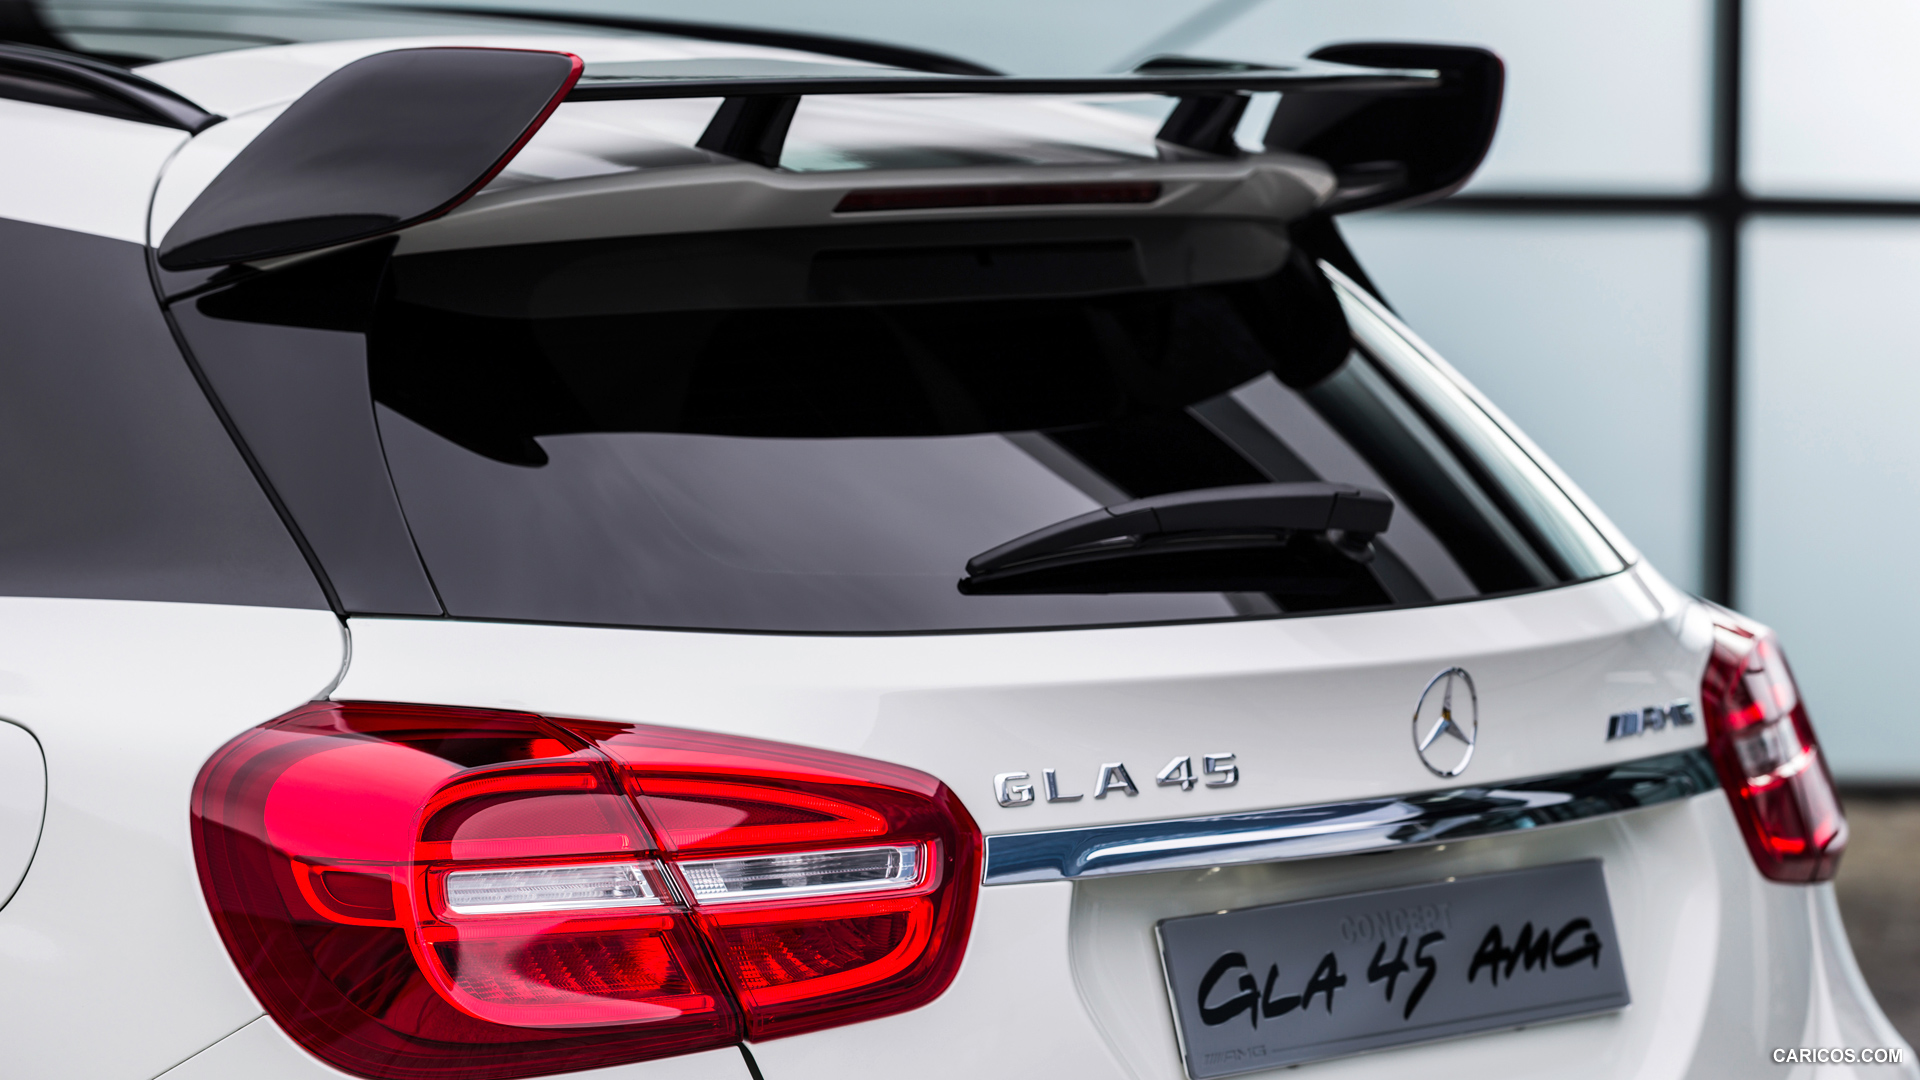 Mercedes-Benz GLA 45 AMG Concept (2013)  - Spoiler, #6 of 15